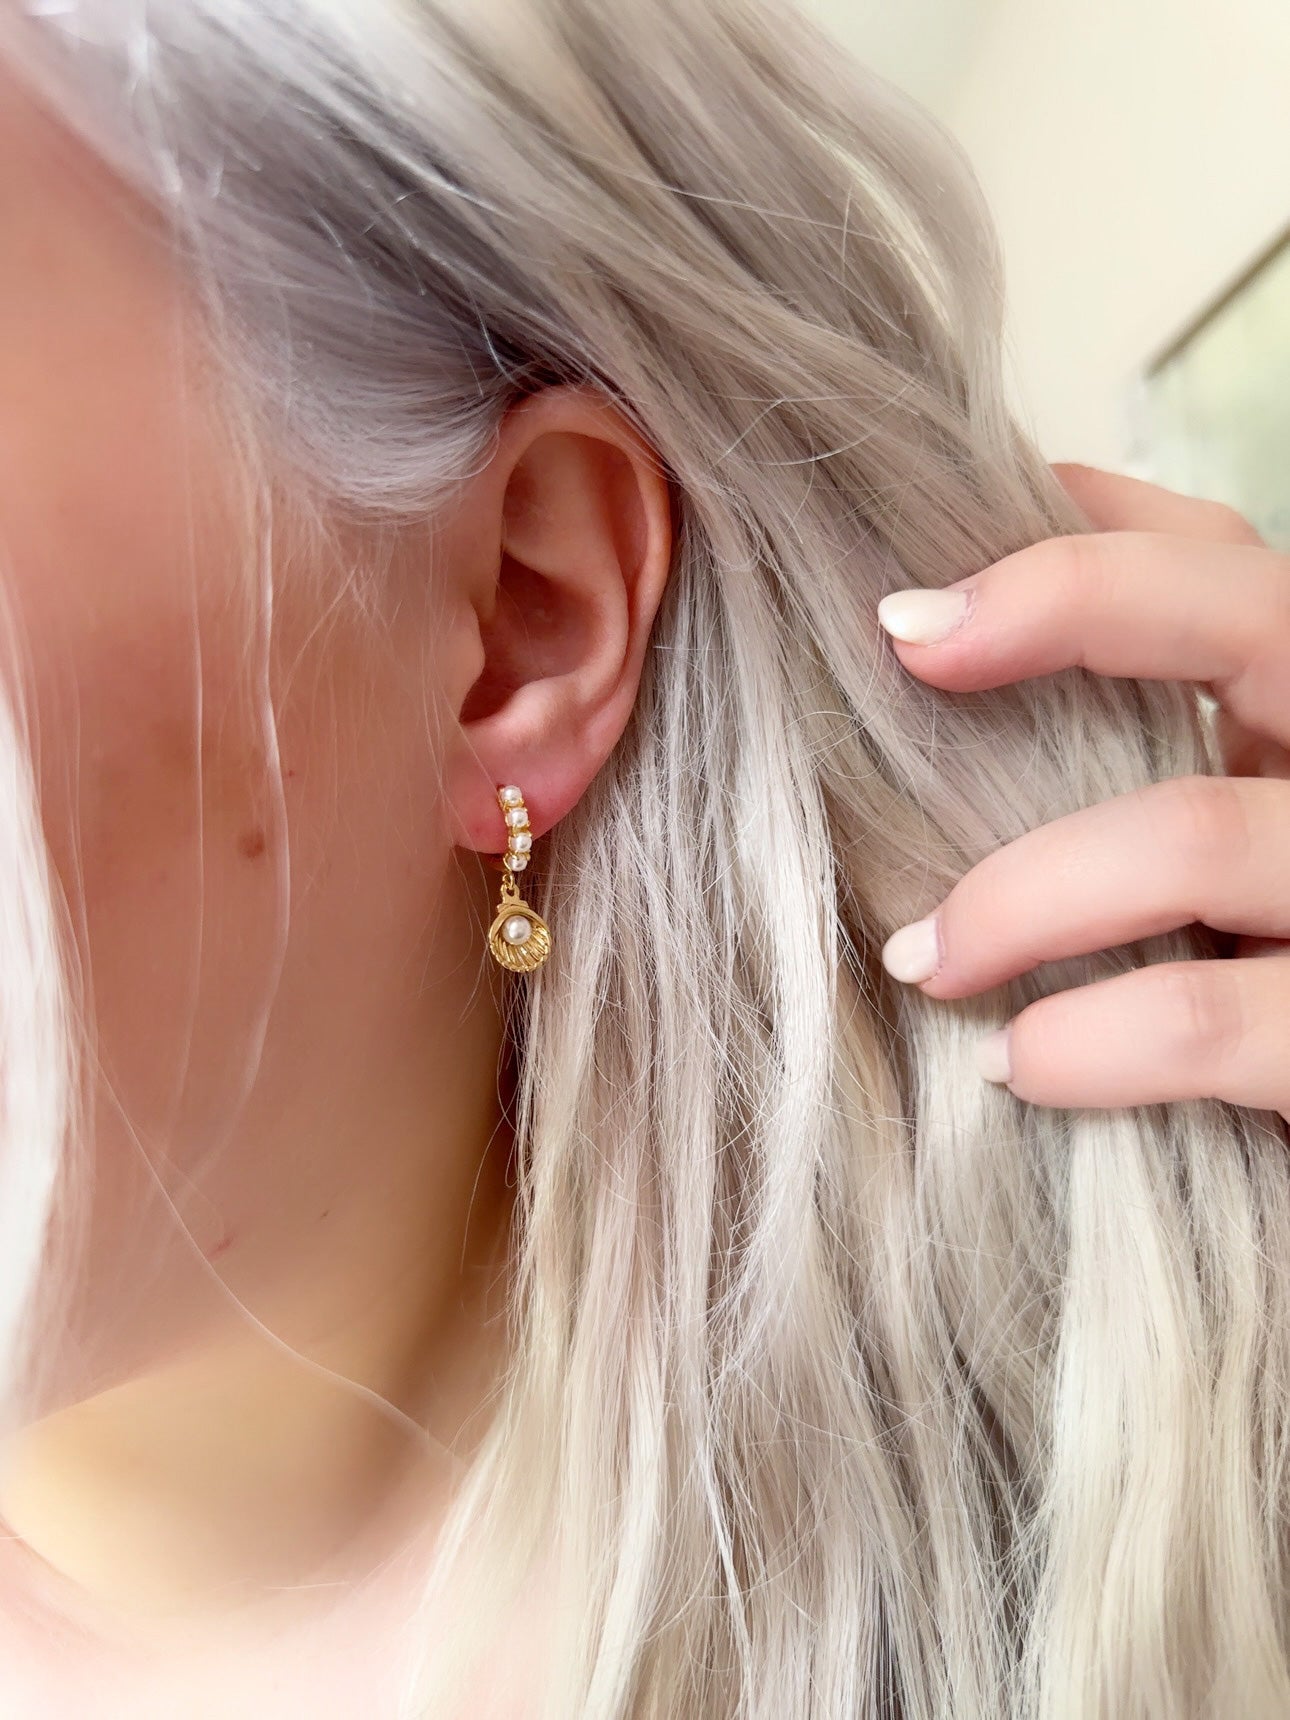 The “Petite Pearl” Seashell Earrings